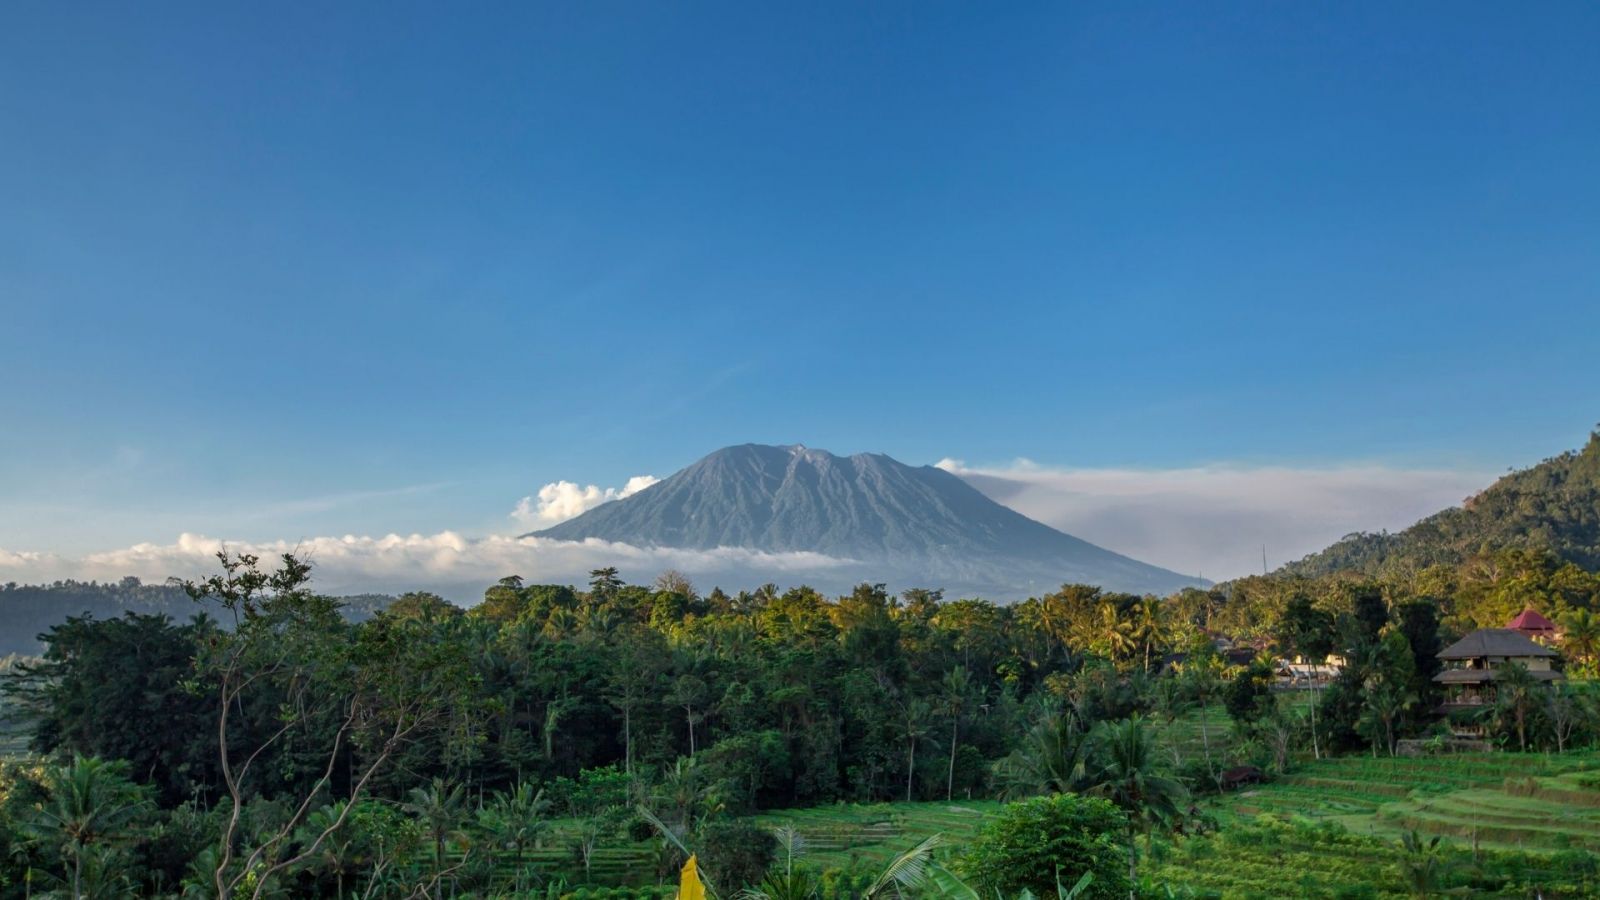 Bali Hiking Holidays. Mount Batur